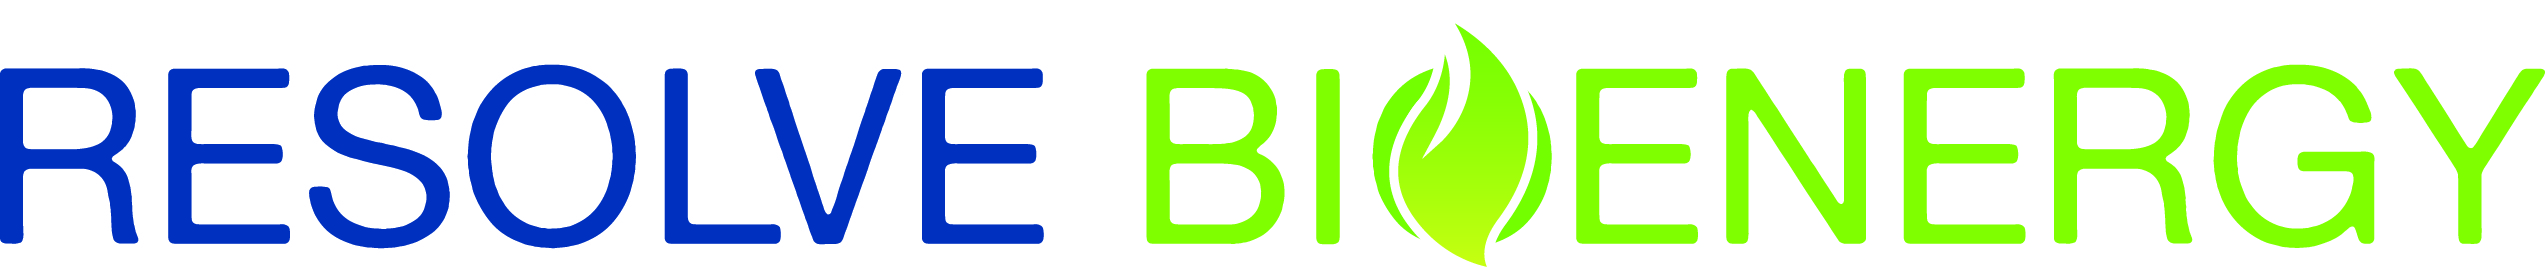 Organisation Logo - Resolve Bioenergy Limited